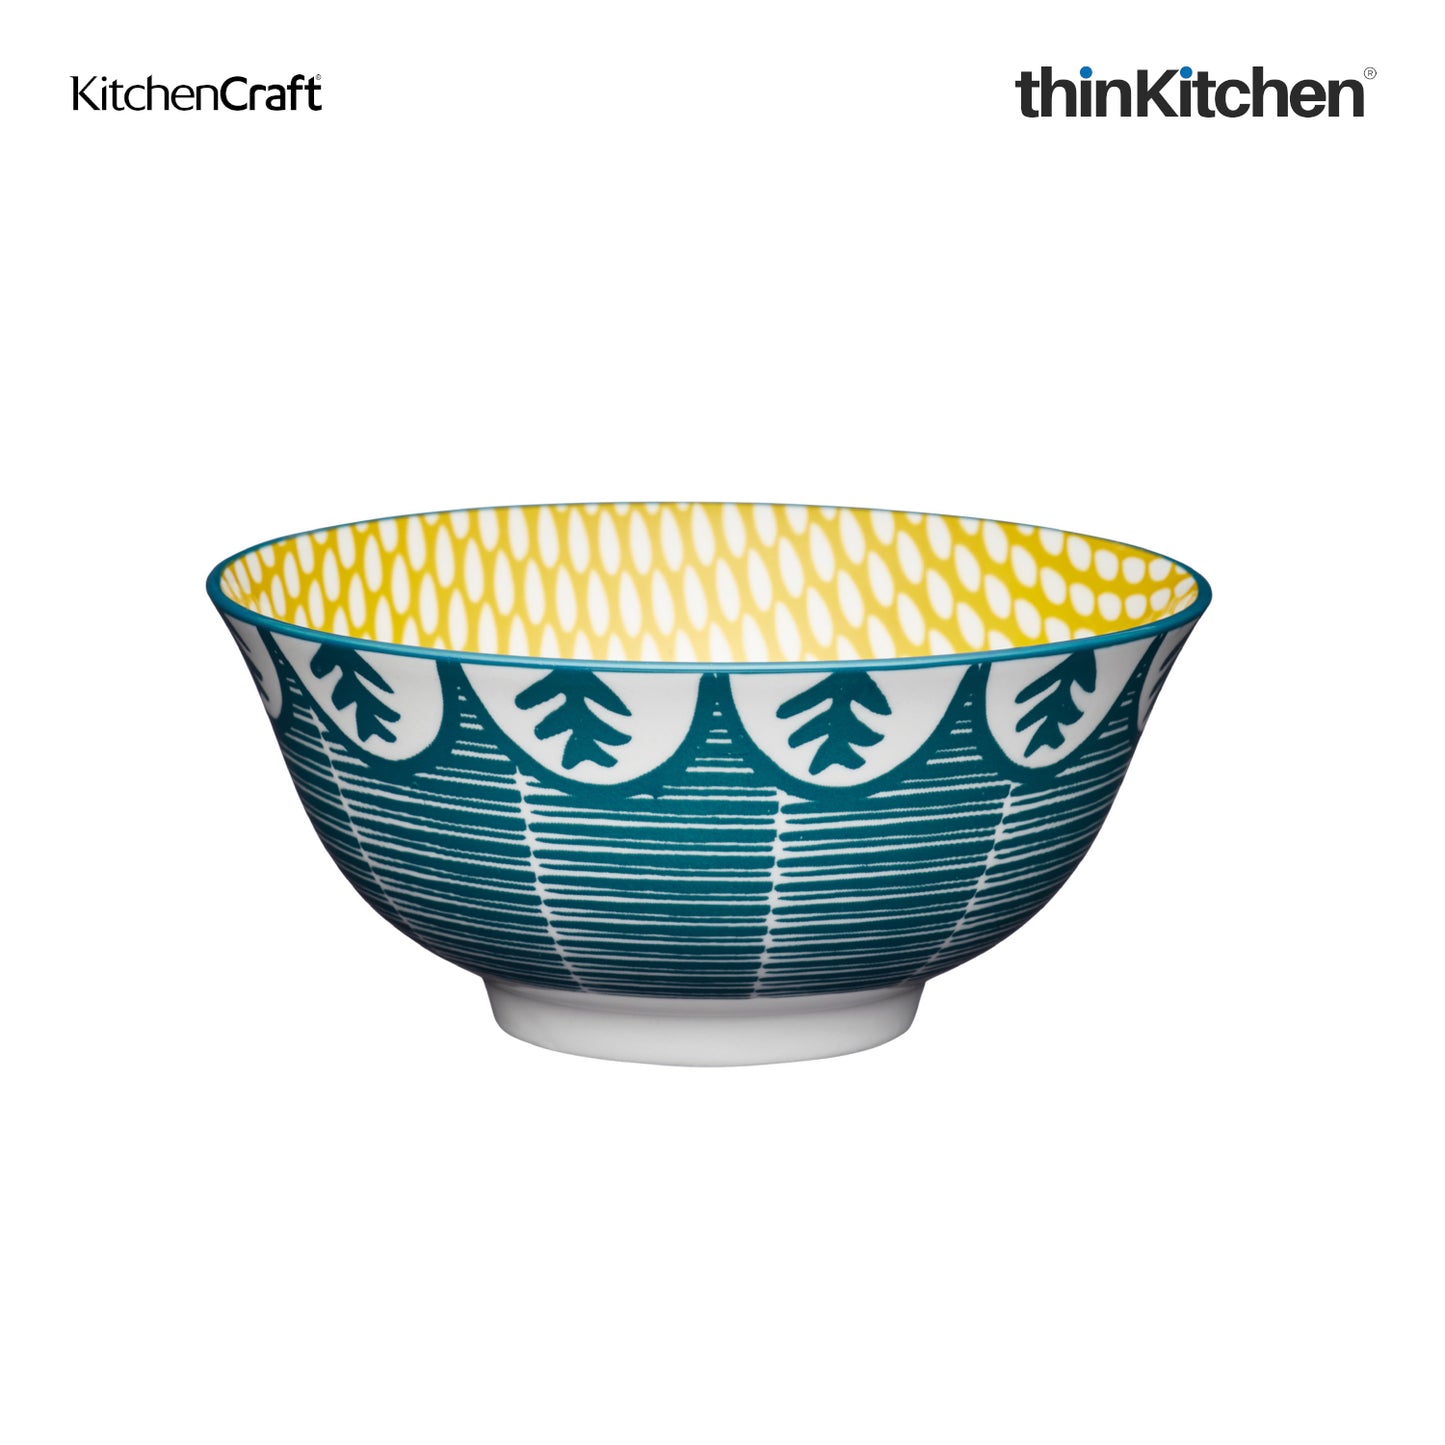 Kitchencraft Leafy Green Print Ceramic Bowl